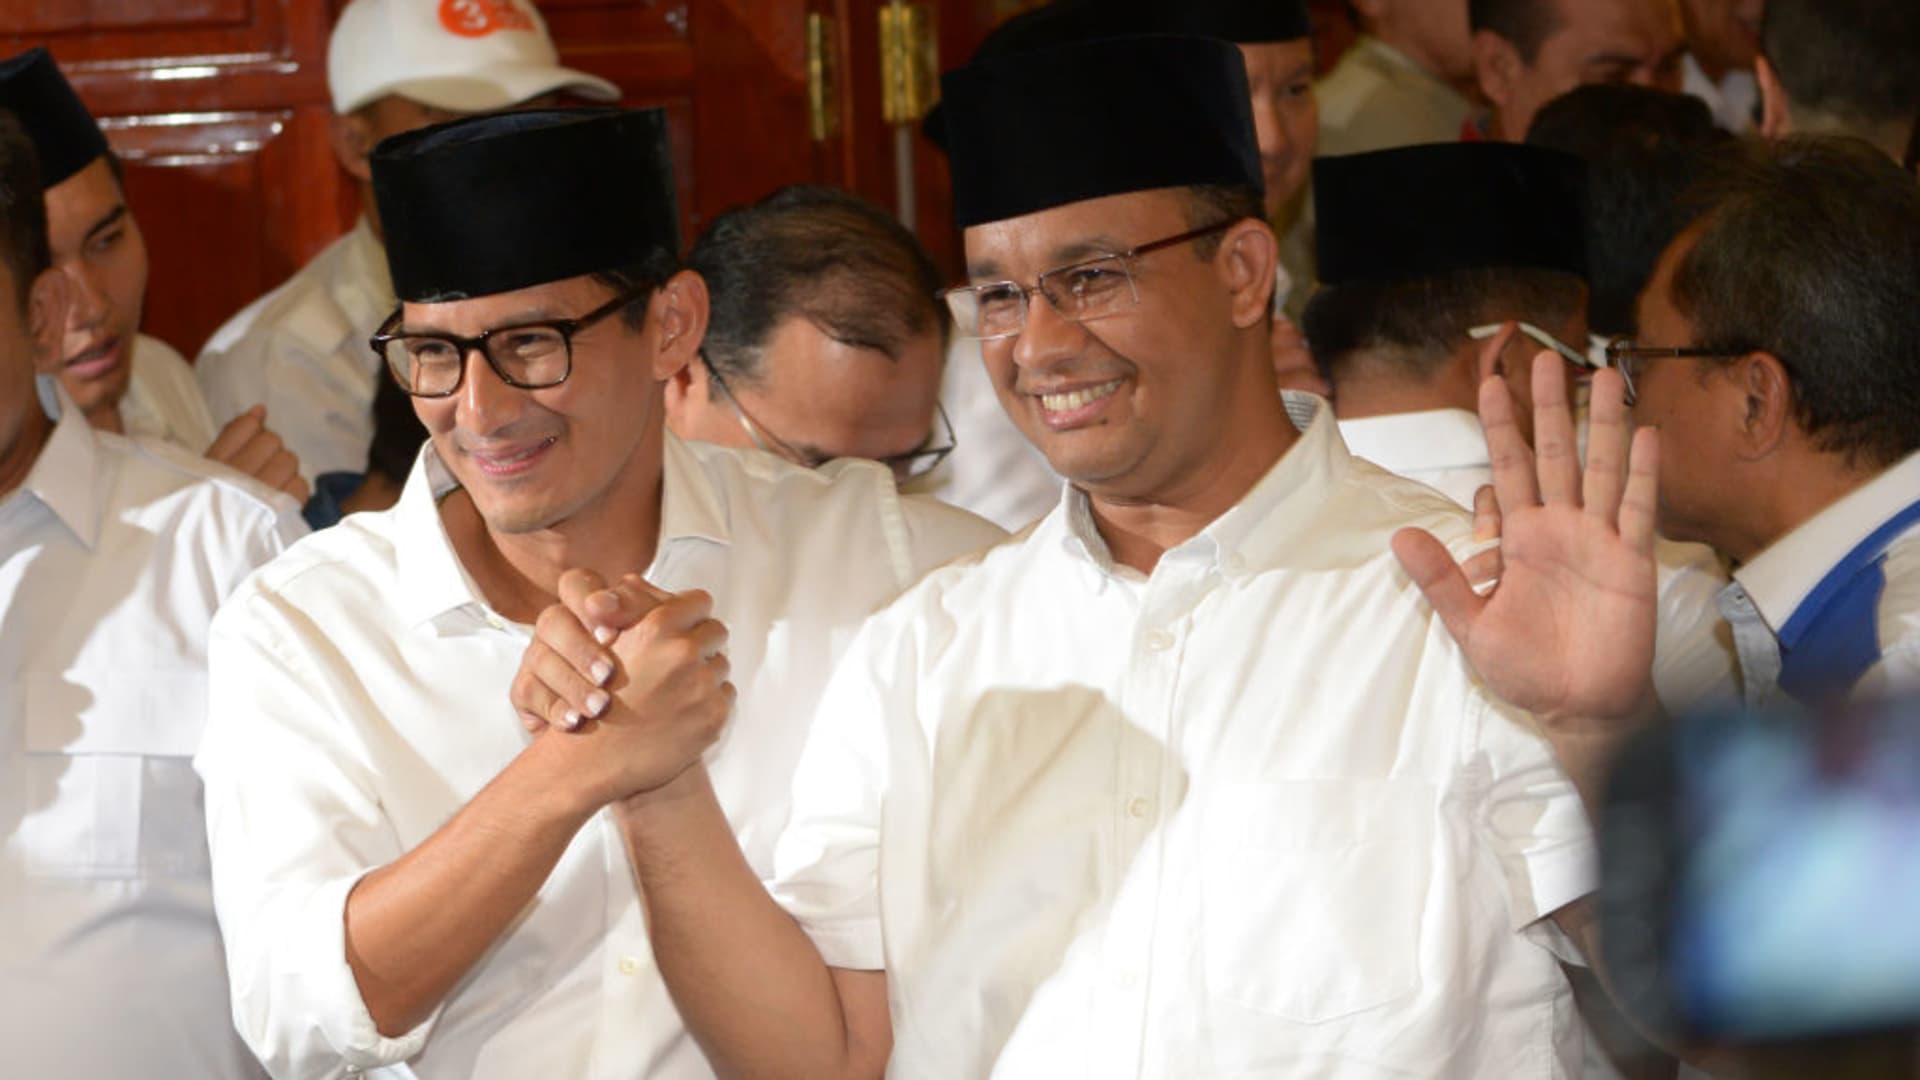 Former education minister Anies Baswedan wins Jakarta election